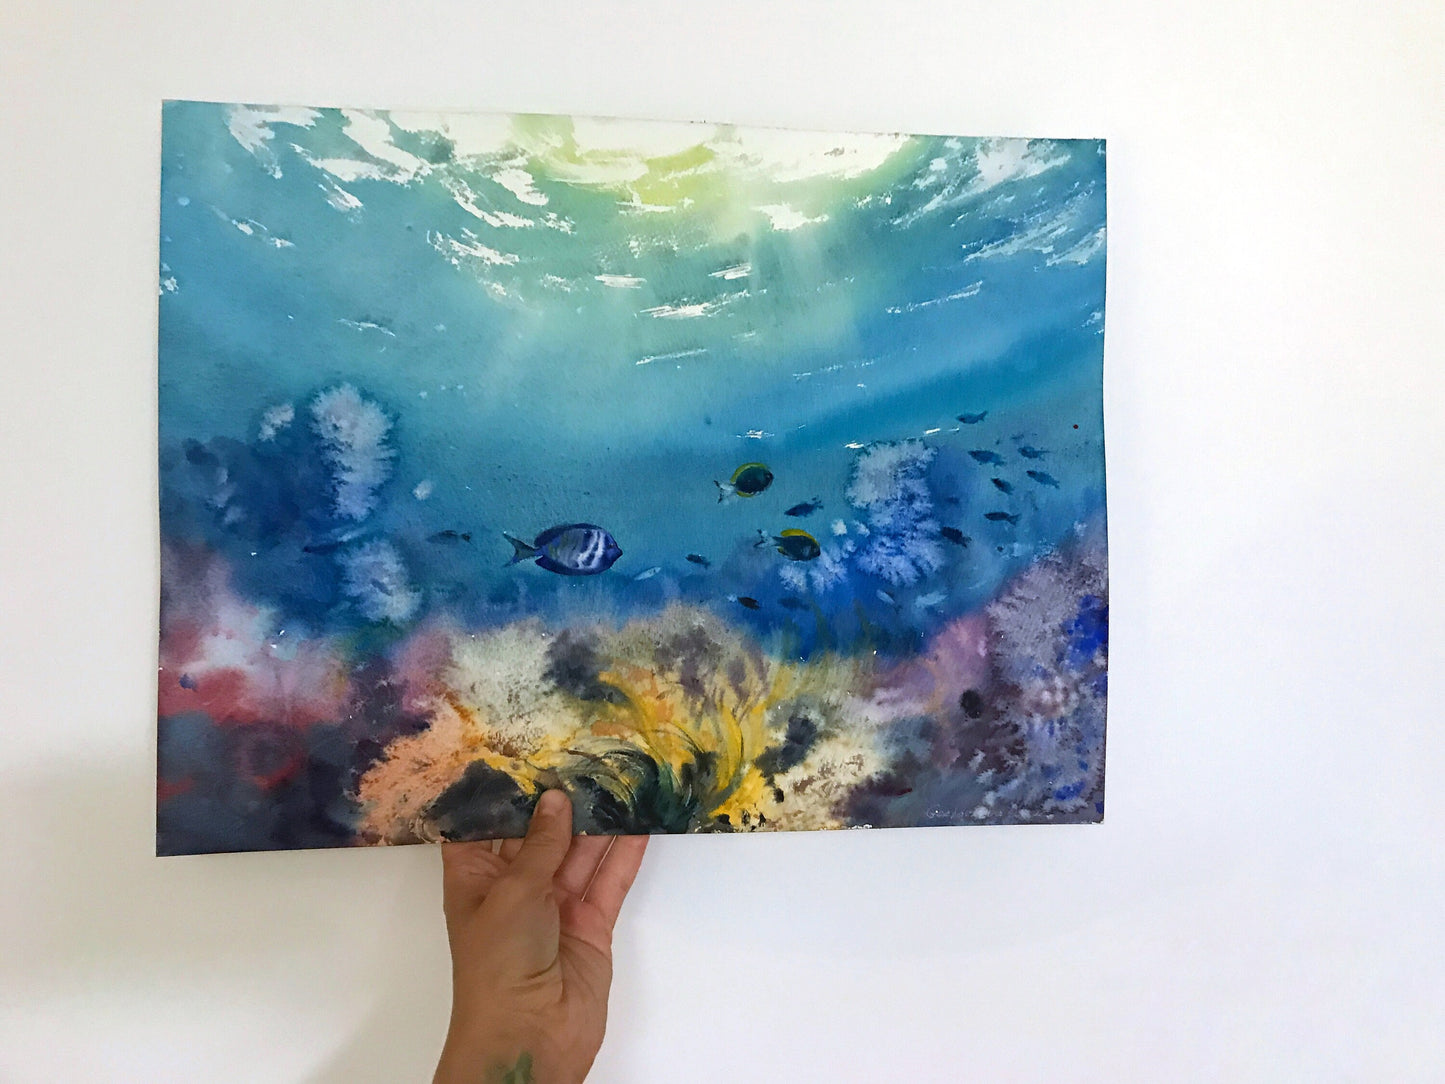 Watercolor Painting Original, Tropic Fish, Undersea Art, Ocean Coral Artwork, Coastal Art, Underwater Wall Decor, Gift